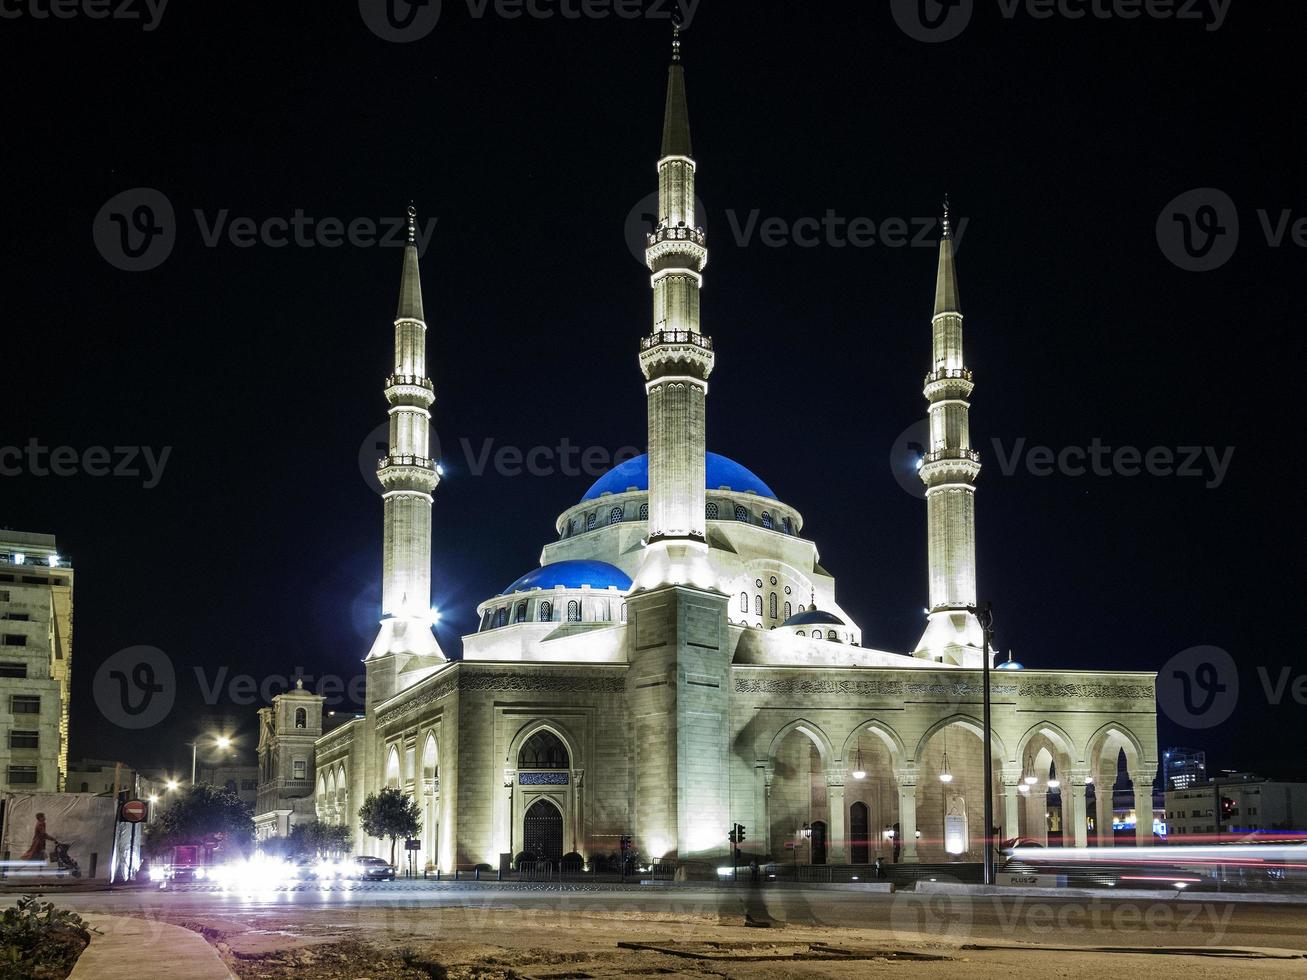 Marco da mesquita de Mohammad Al amin no centro de Beirute, Líbano, à noite foto